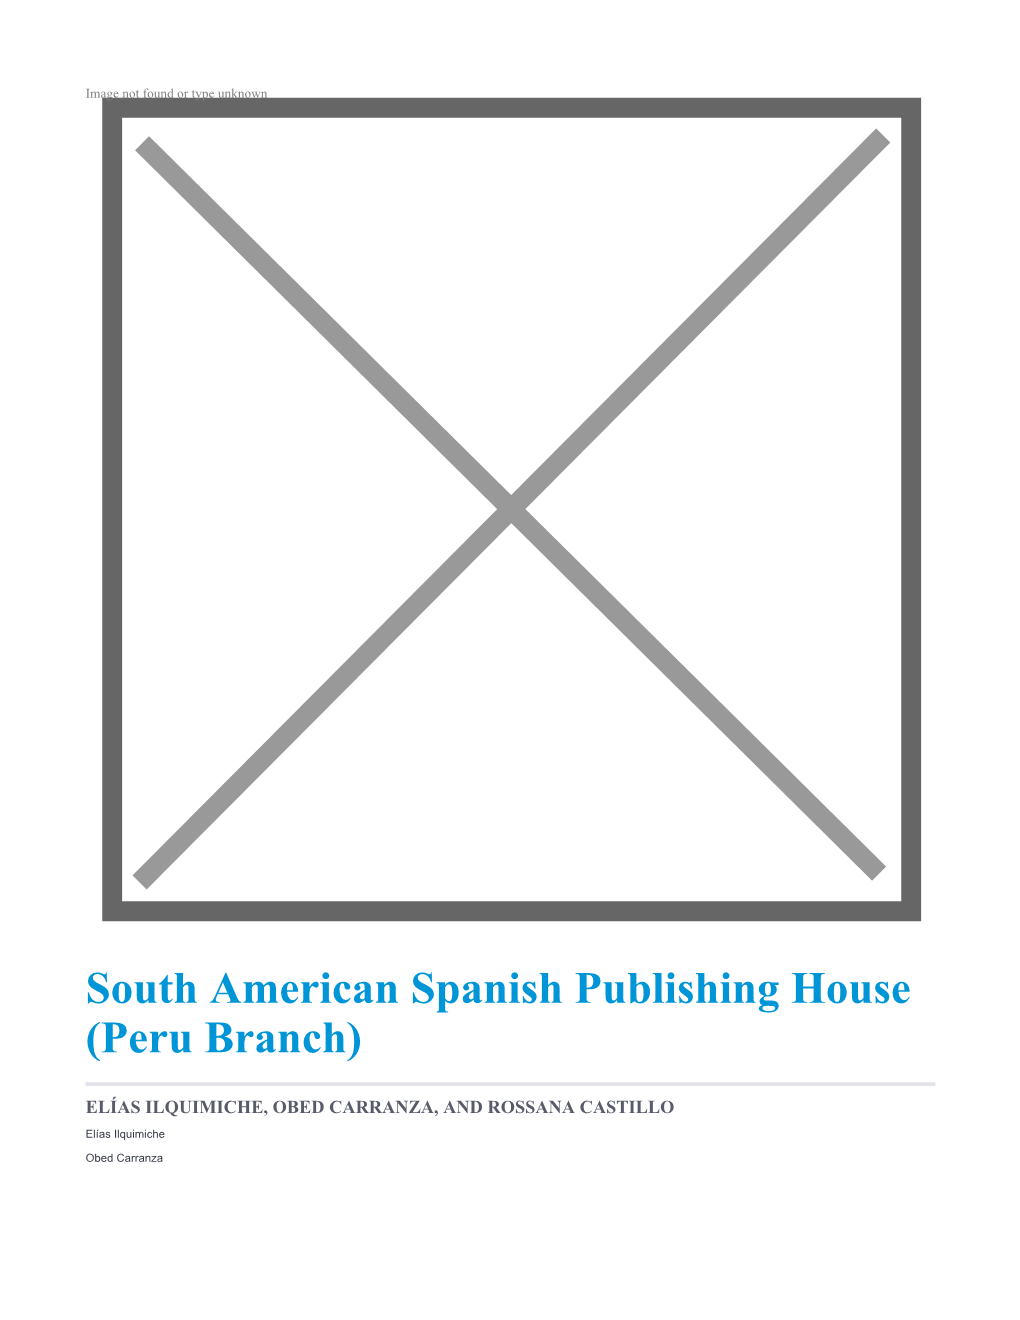 South American Spanish Publishing House (Peru Branch)